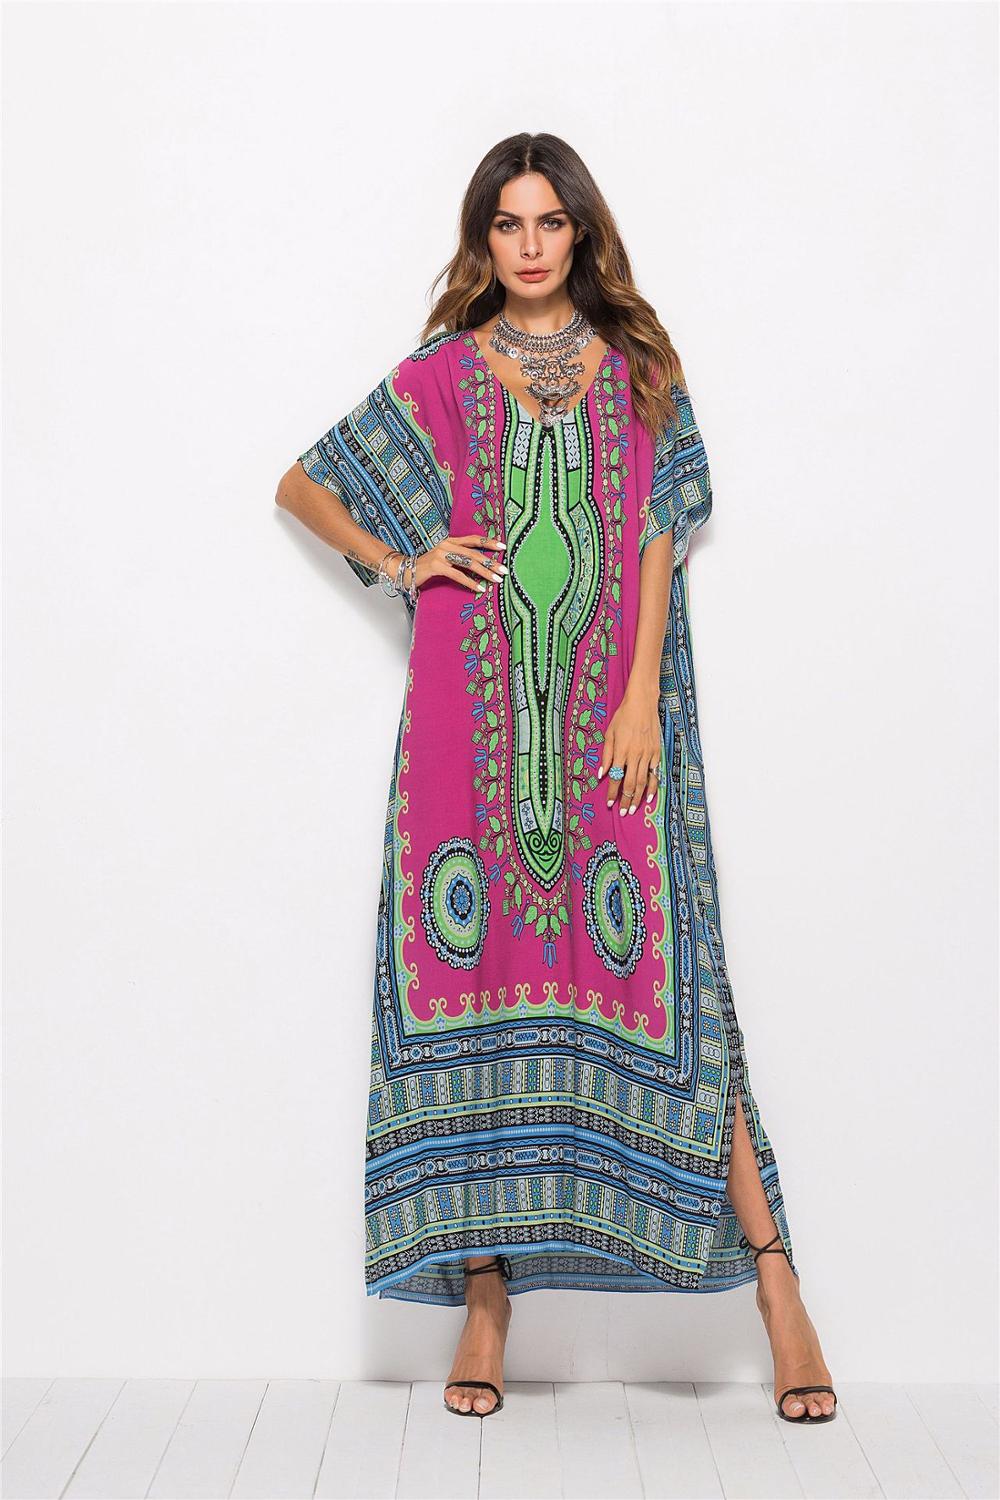 New Fashion Dress For Women Elegant Oversized Dress African Print Dashiki Dresses For Lady